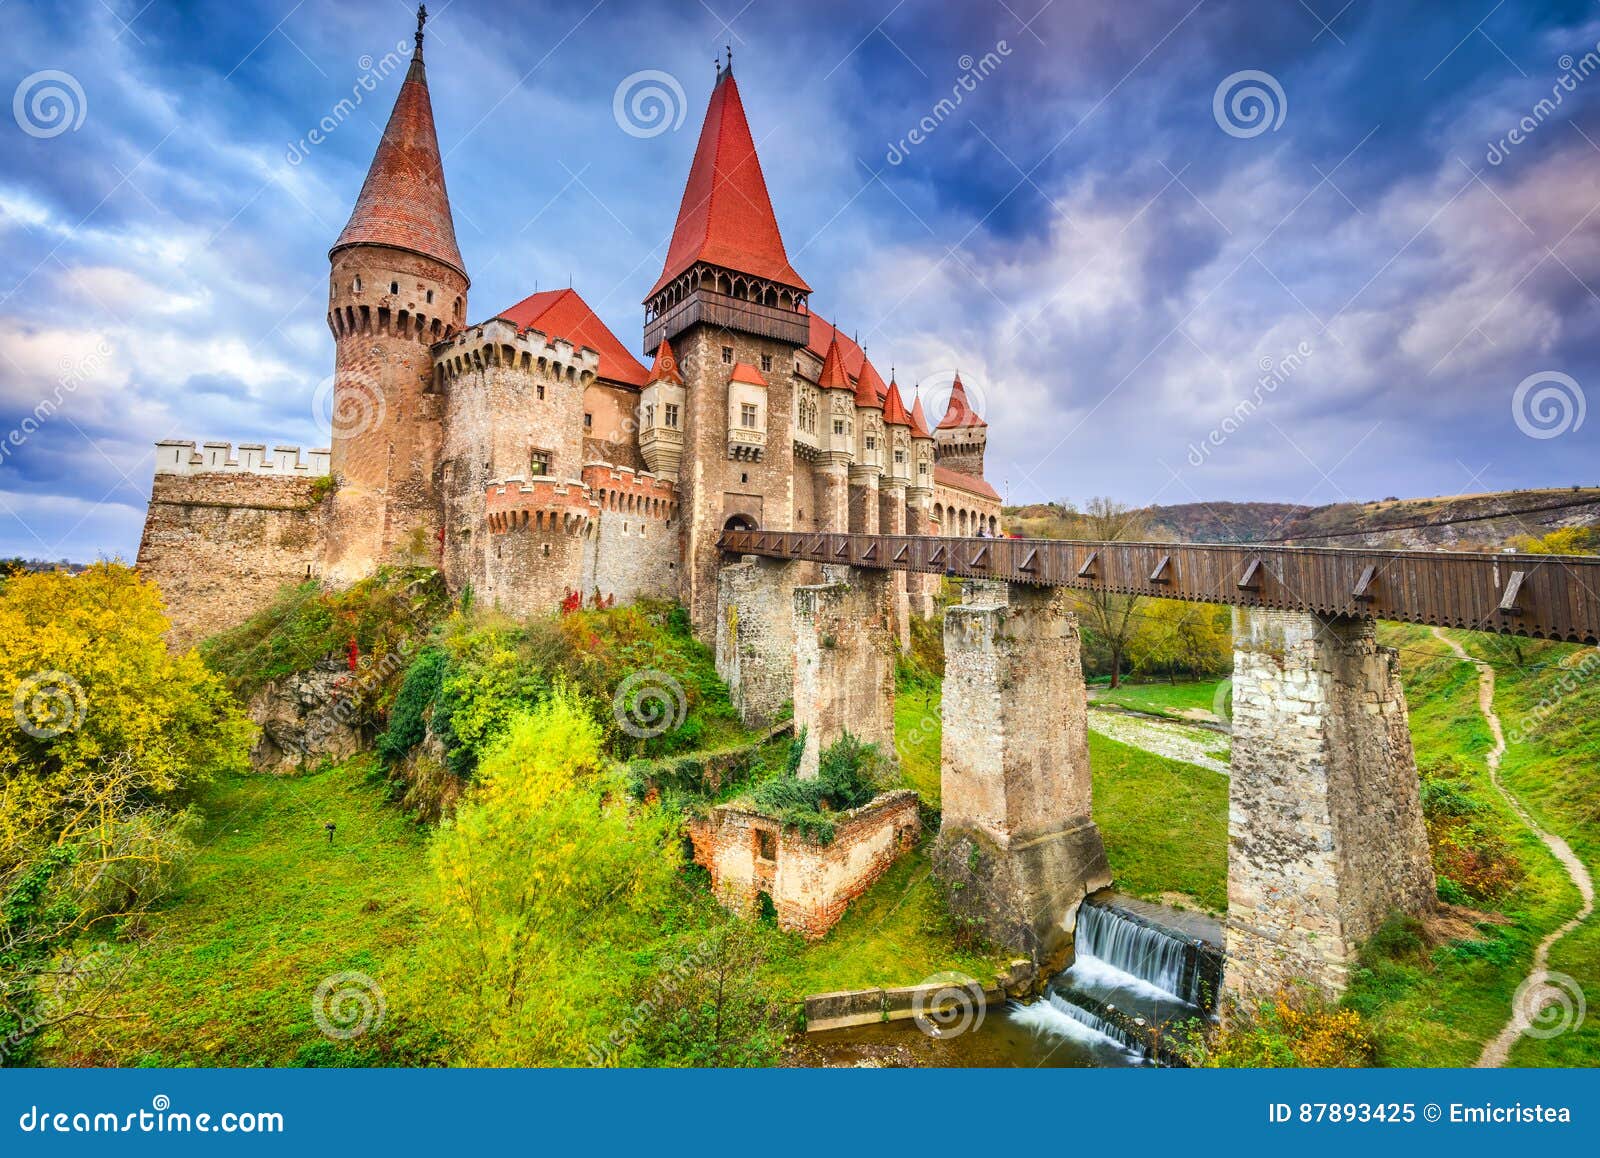 corvin castle - hunedoara, transylvania, romania